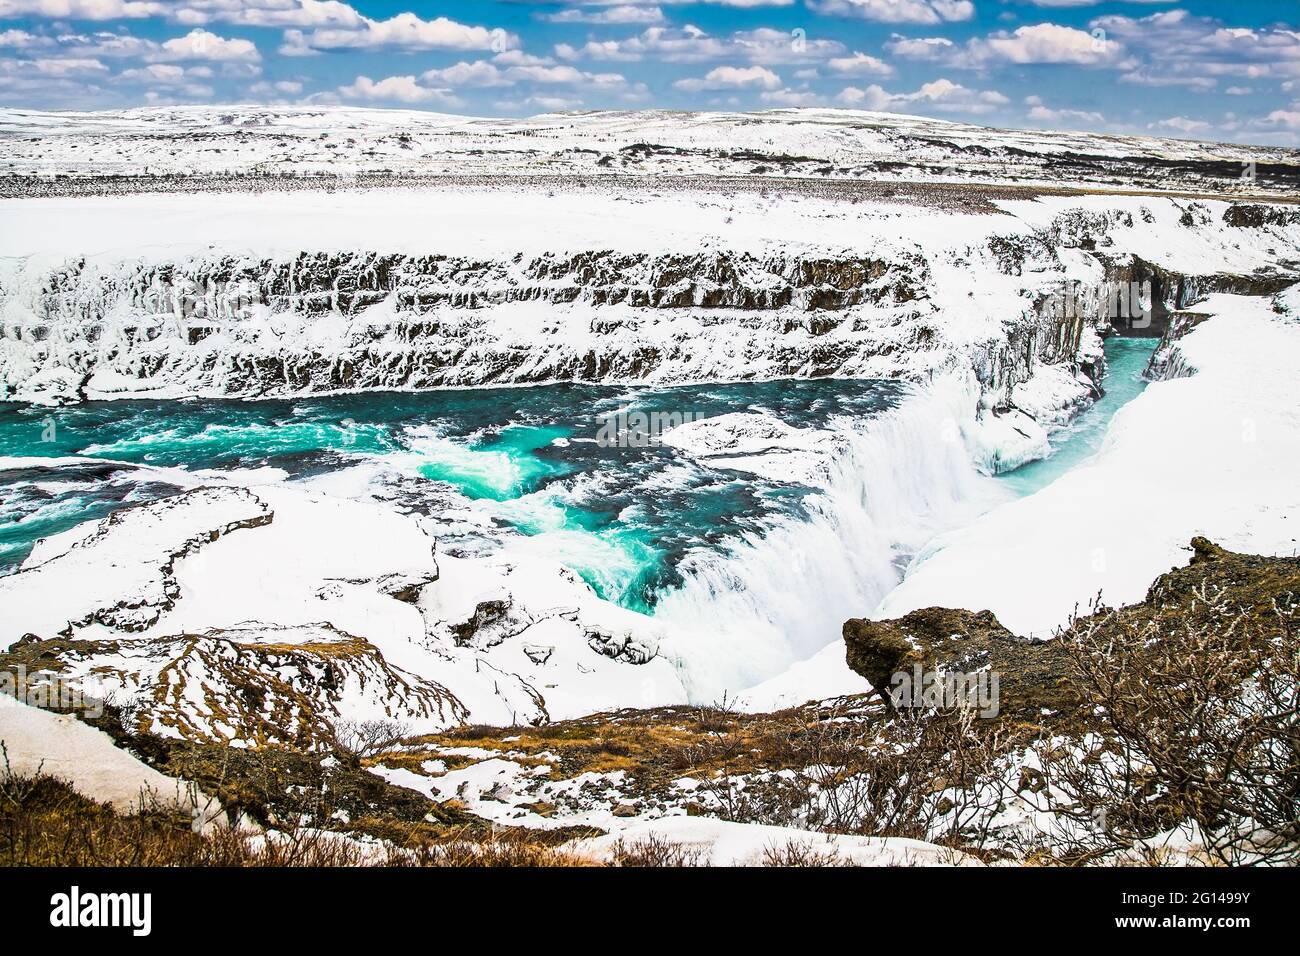 Belles cascades de Gullfoss en hiver, en Islande. Banque D'Images